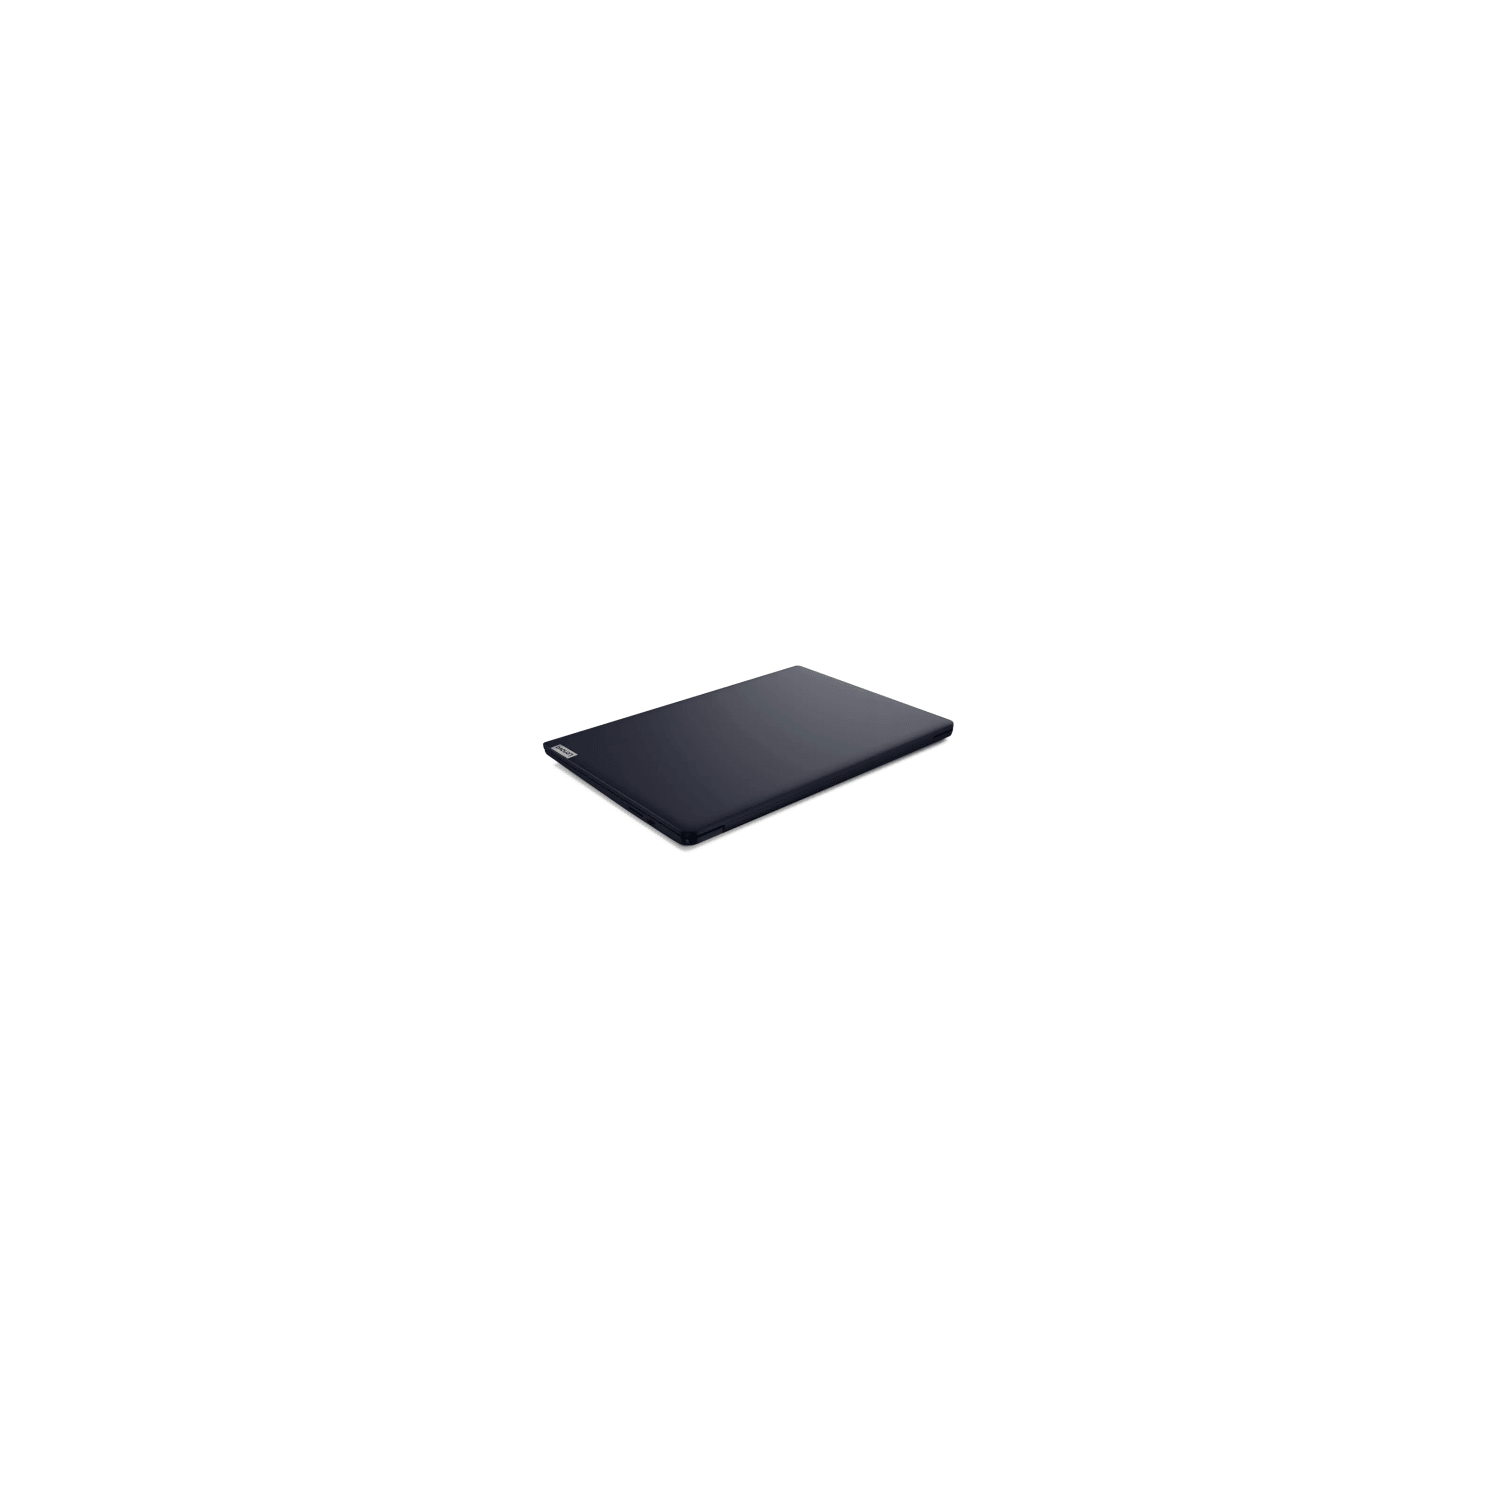 Lenovo Ideapad 3 17.3" HD Intel Core i5-1035G1 8Go RAM DDR4 1To HDD Win 10 Black Laptop